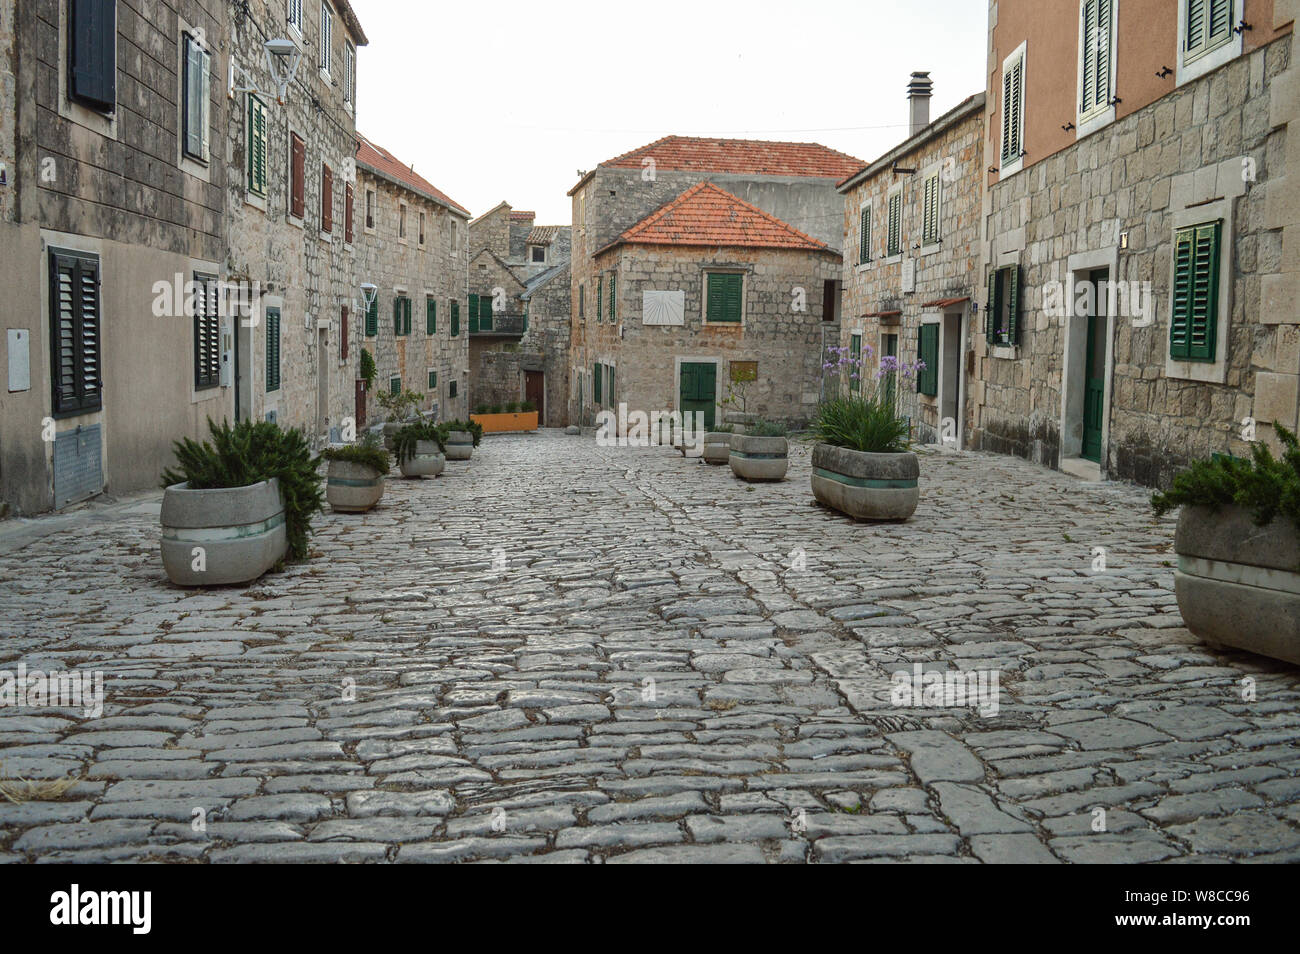 Typicall dalmatian stone architecture, streets of town Postira, Brač island, Croatia Stock Photo